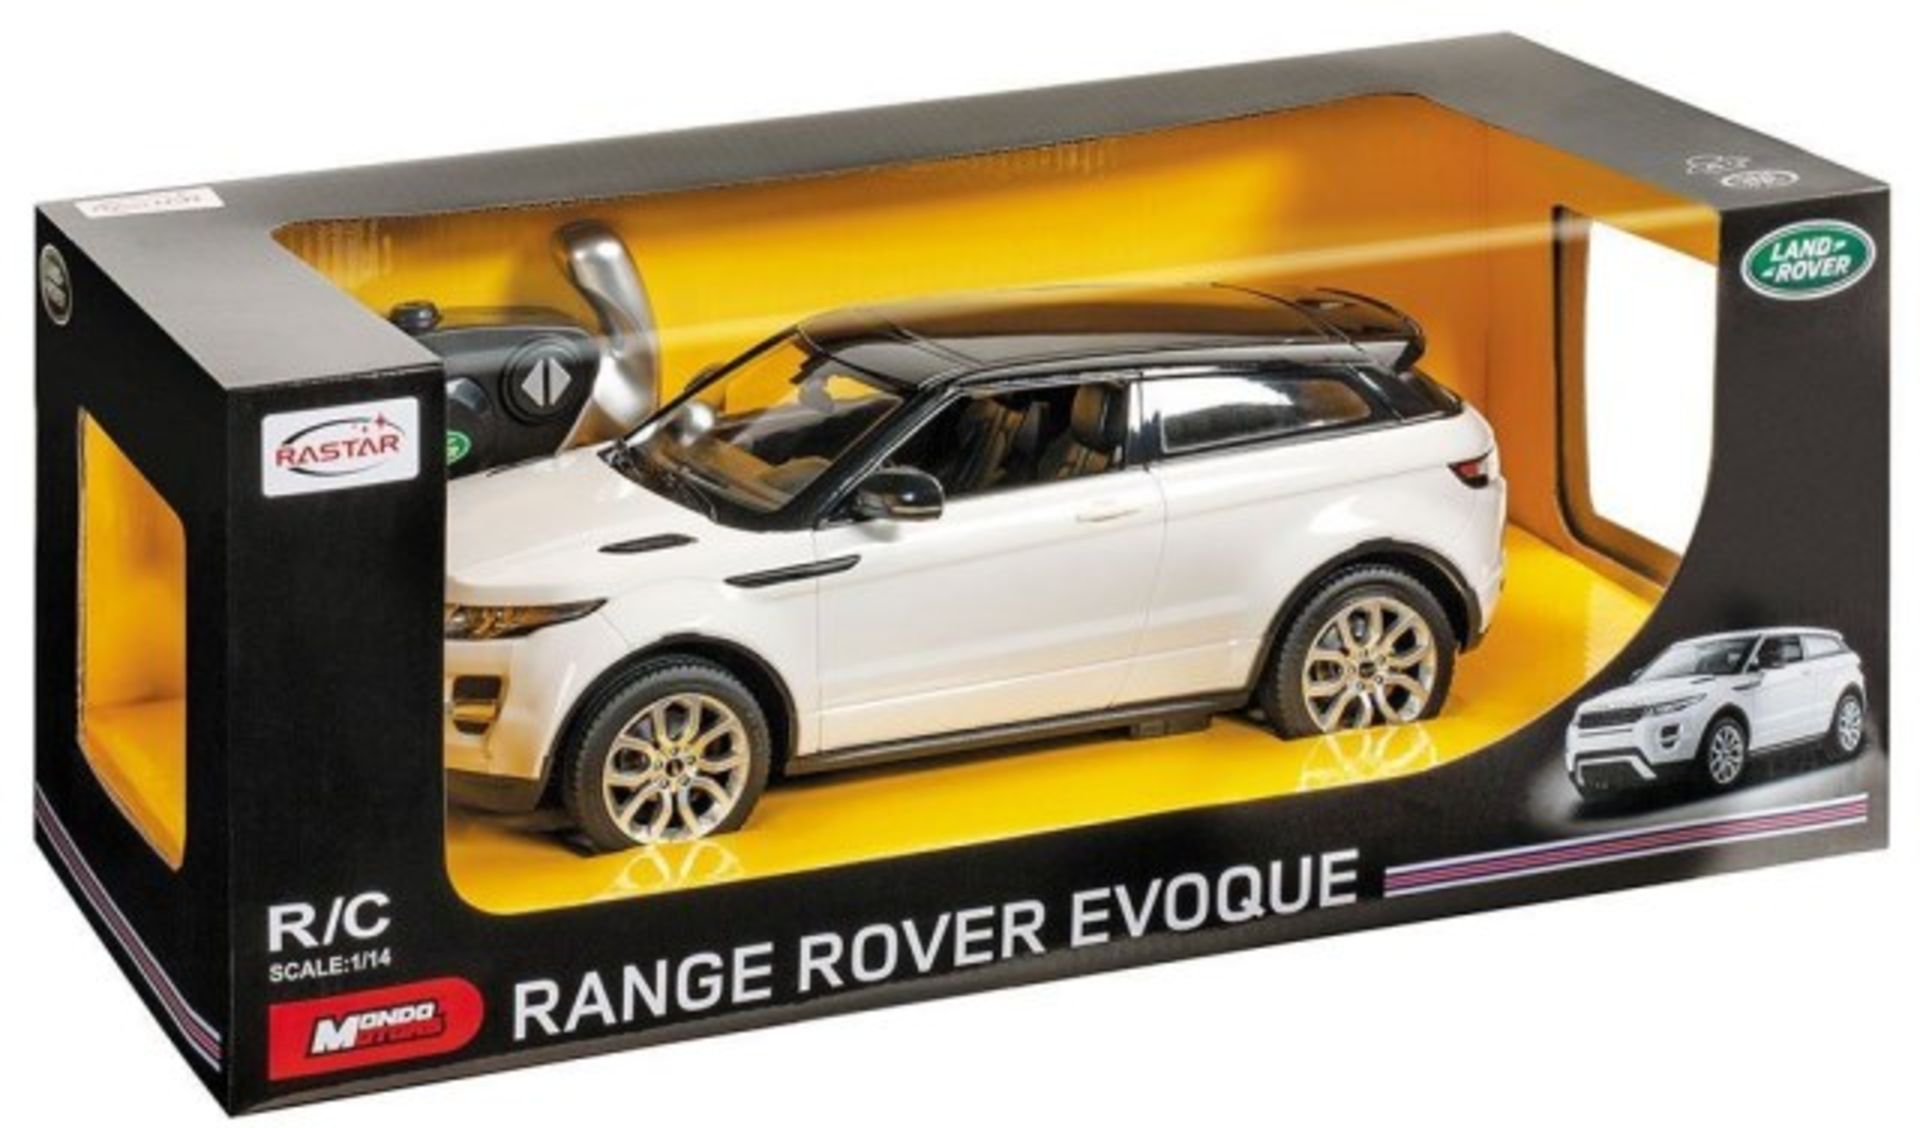 V Brand New 1:14 Scale R/C Range Rover Evoque SRP49.99 Various Colours